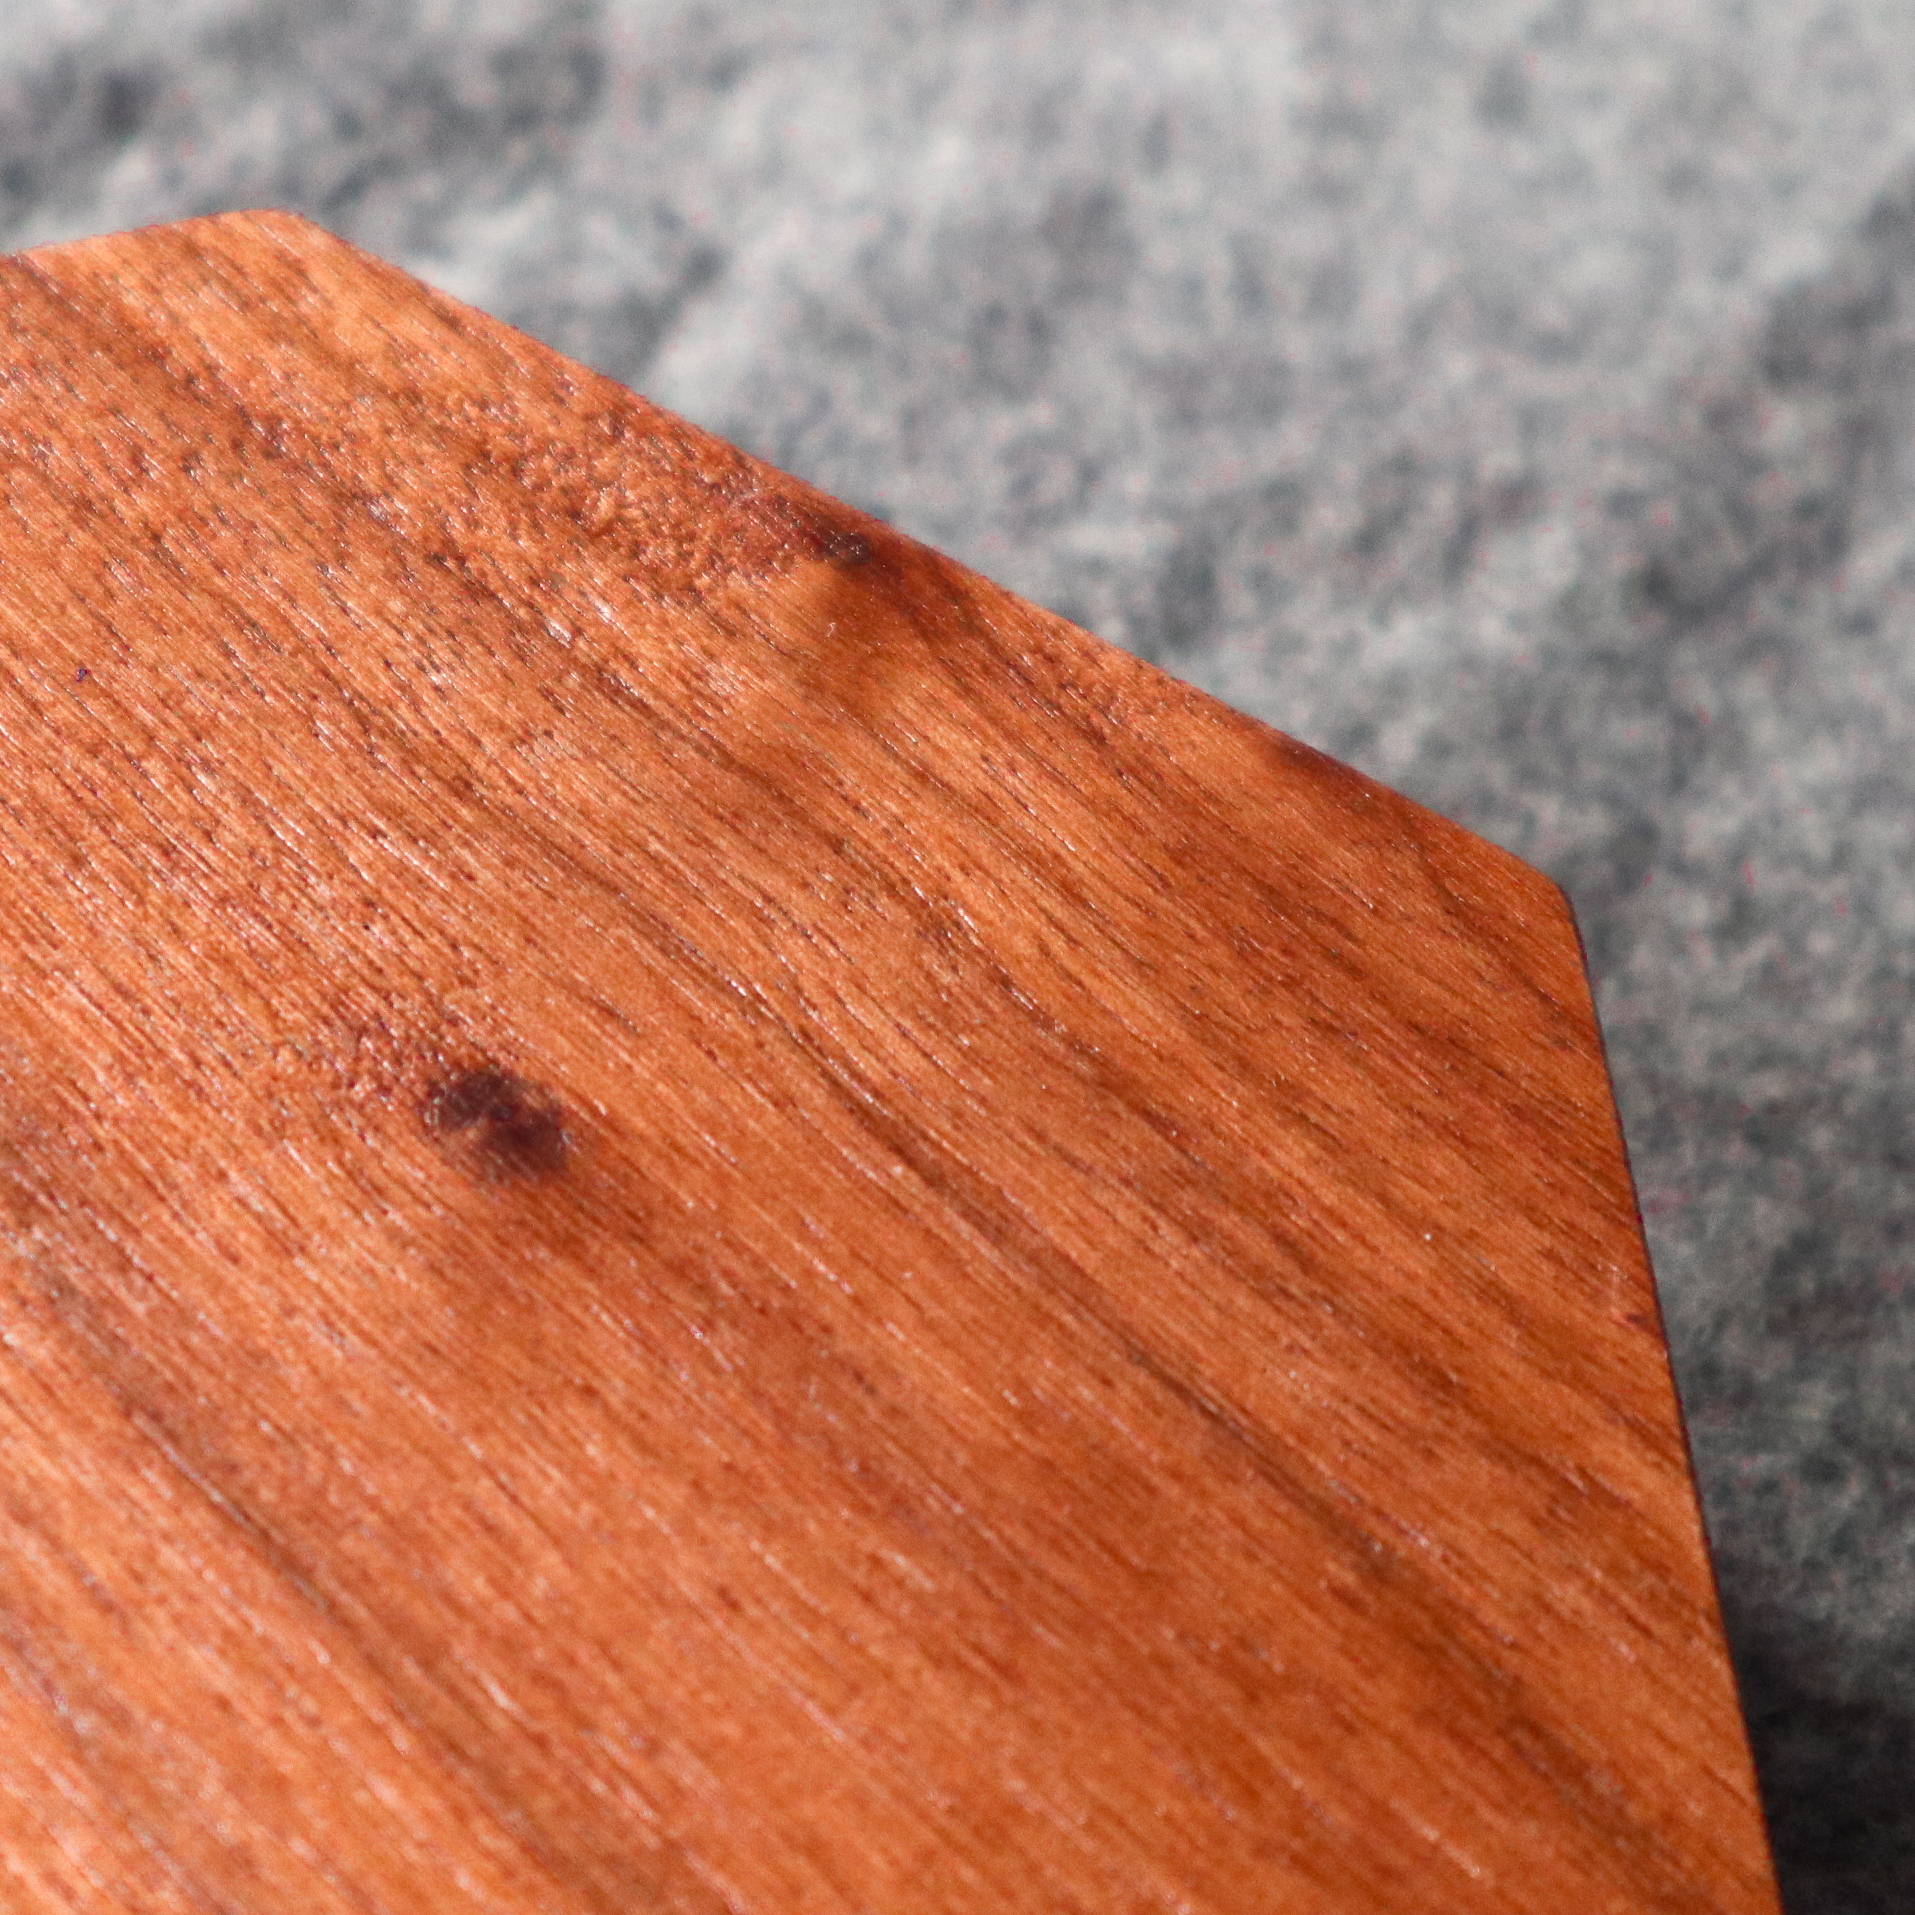 Real walnut base close up photo of the edge